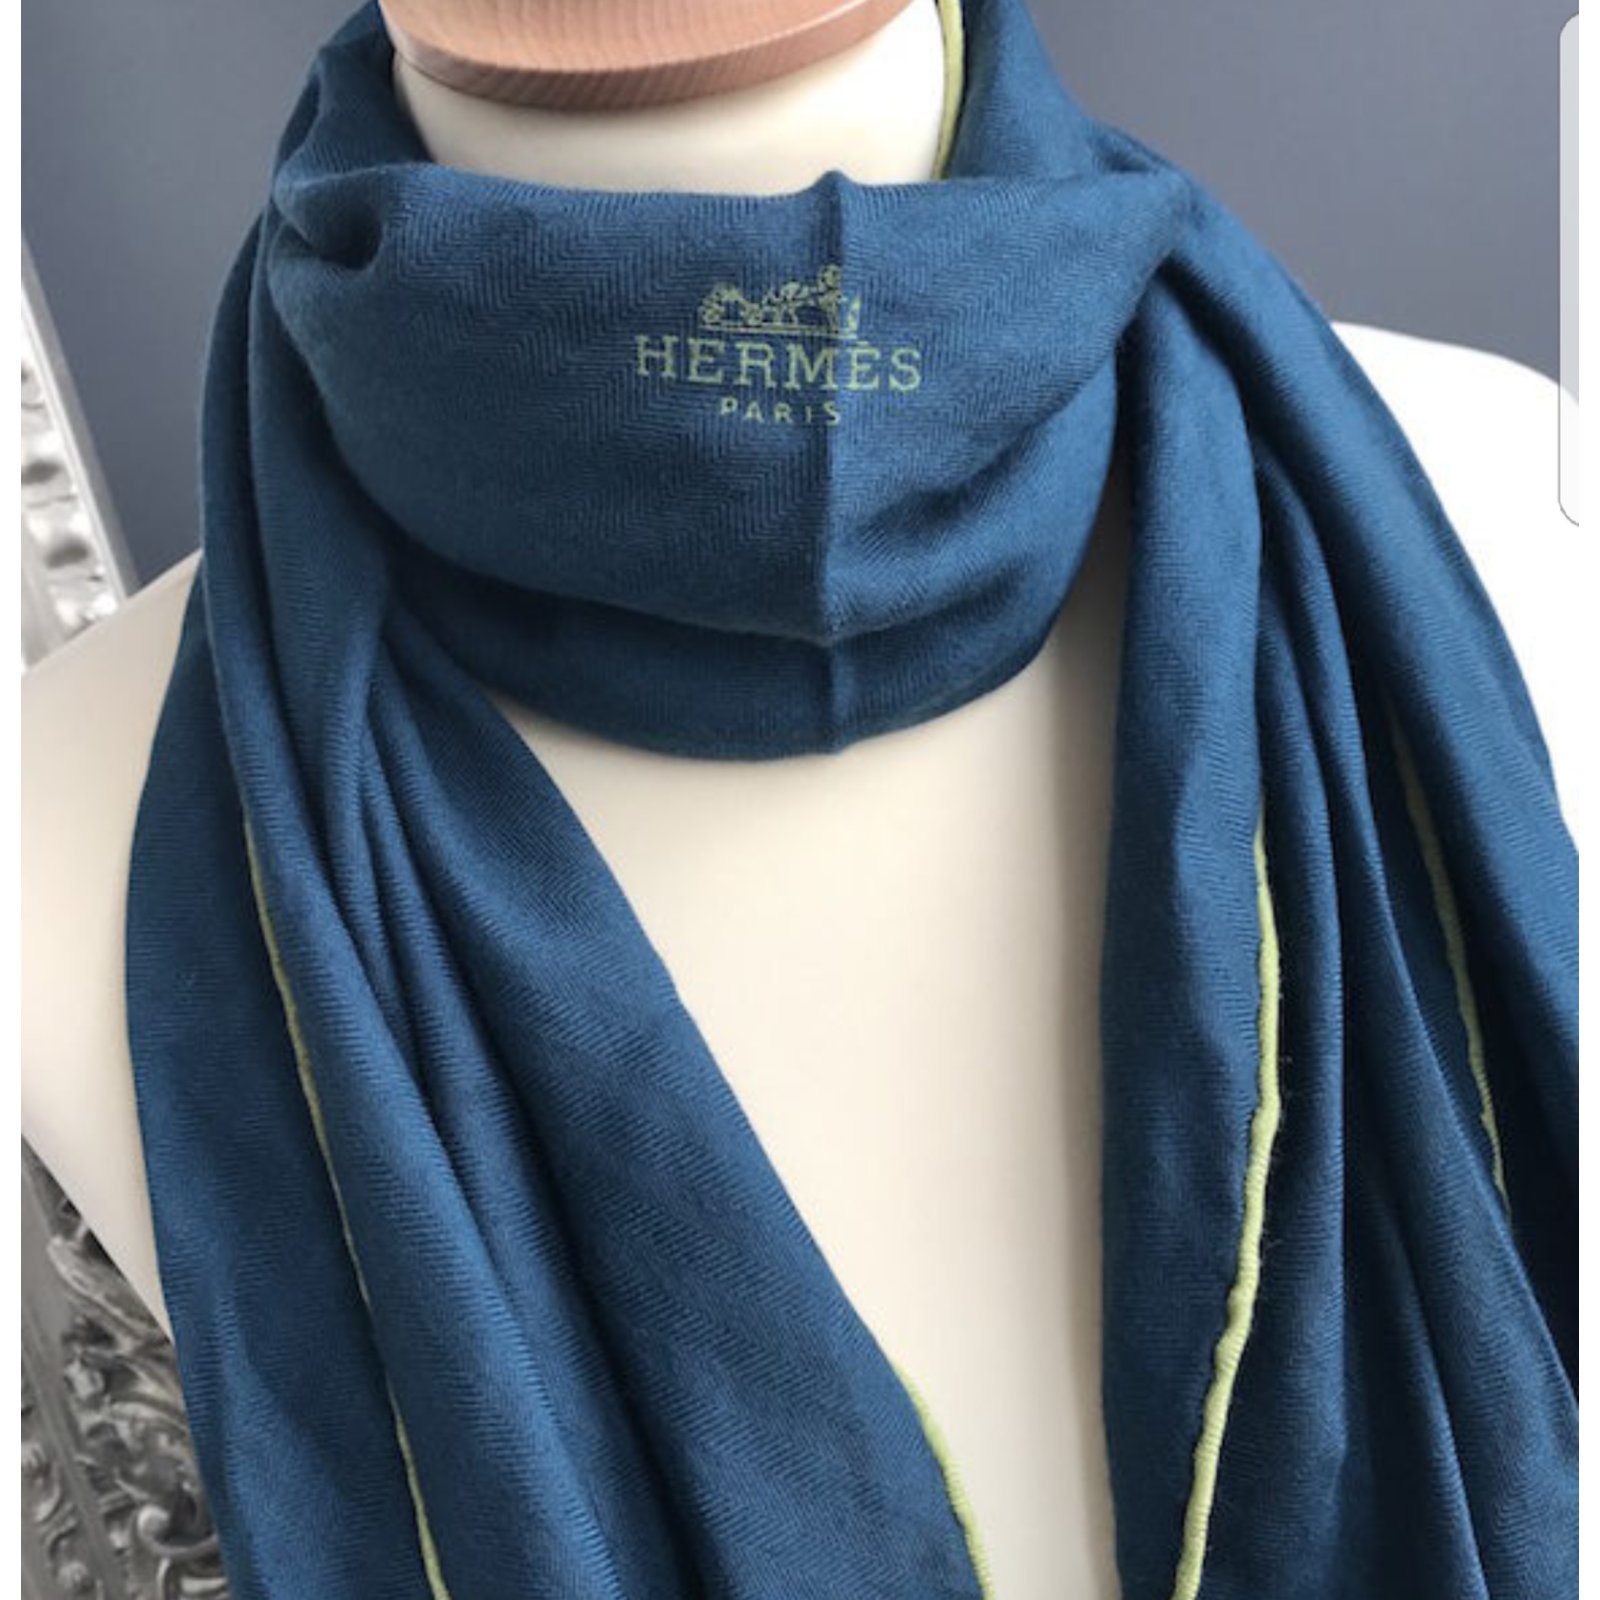 hermes mens cashmere scarf